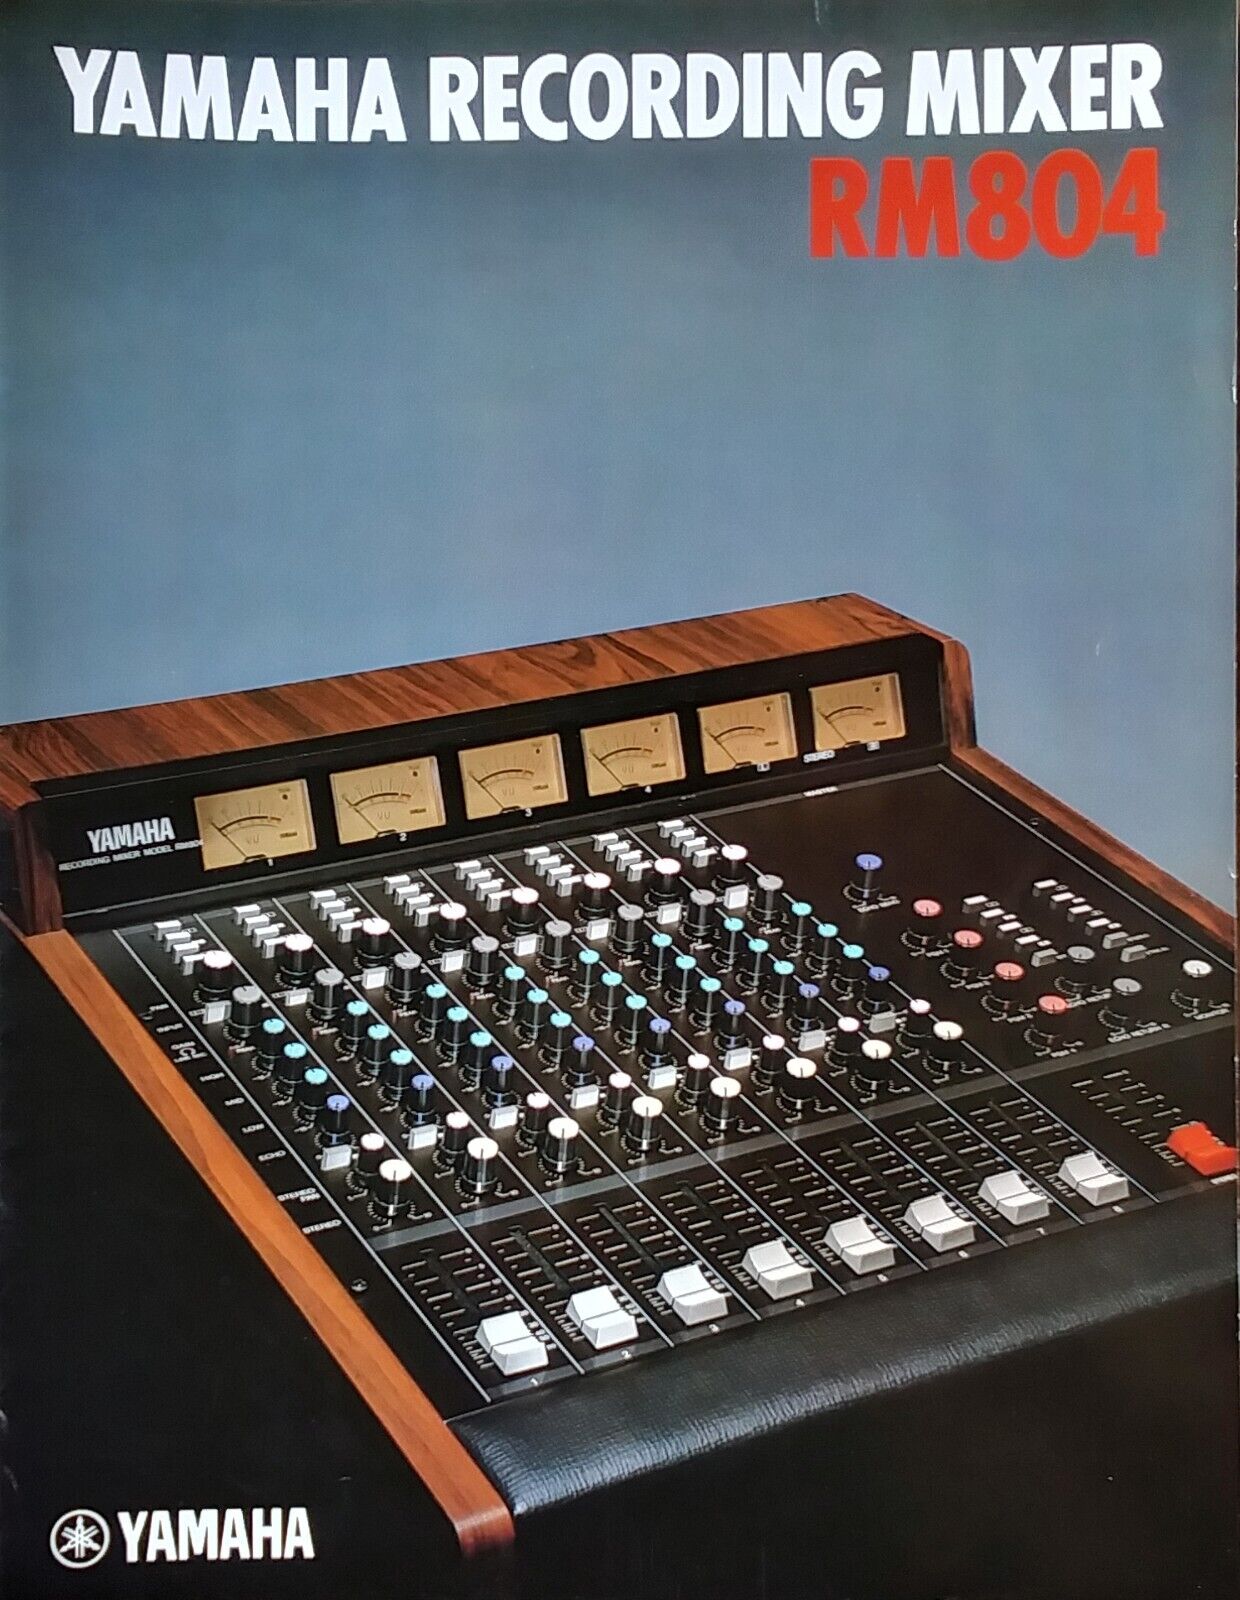 Yamaha RM804 Recording Mixer Original 8 Page Color Brochure, Printed in Japan.